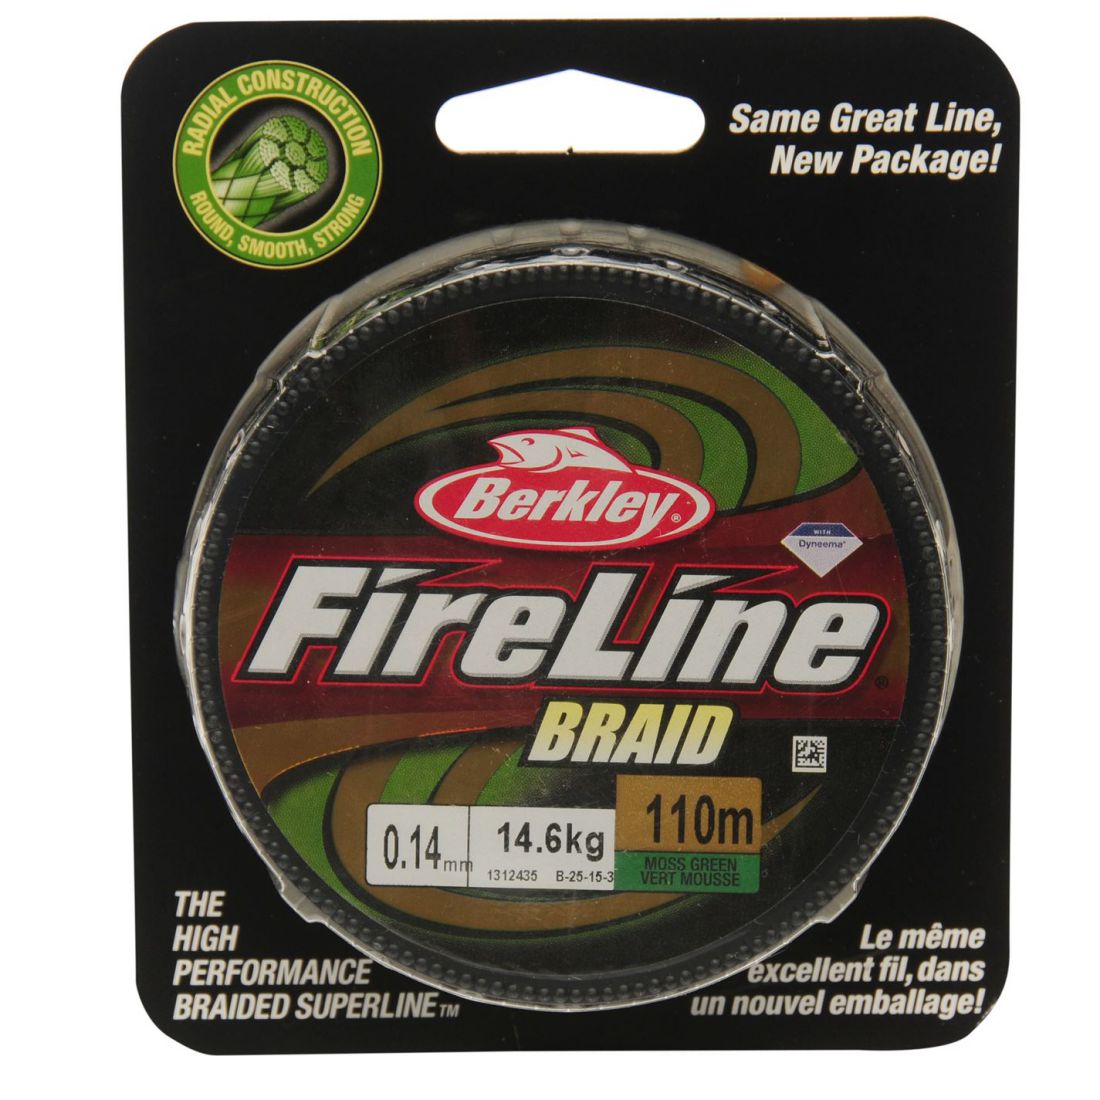 Berkley Fireline Braid Fishing Line eBay